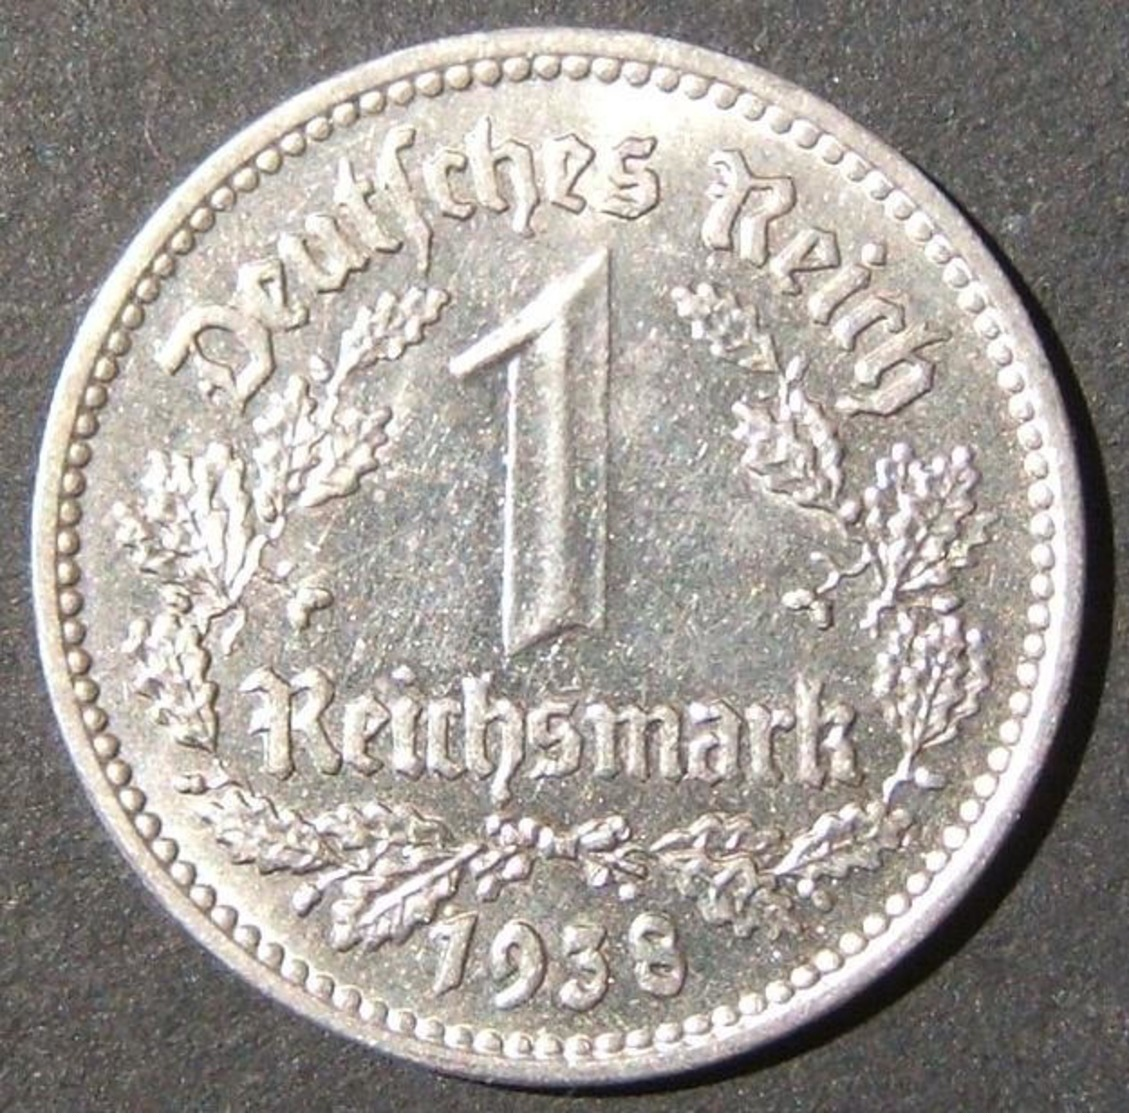 Nazi Germany 2x high-grade silver Reichsmarks coins 1934A UNC & 1938G BU; KM# 78